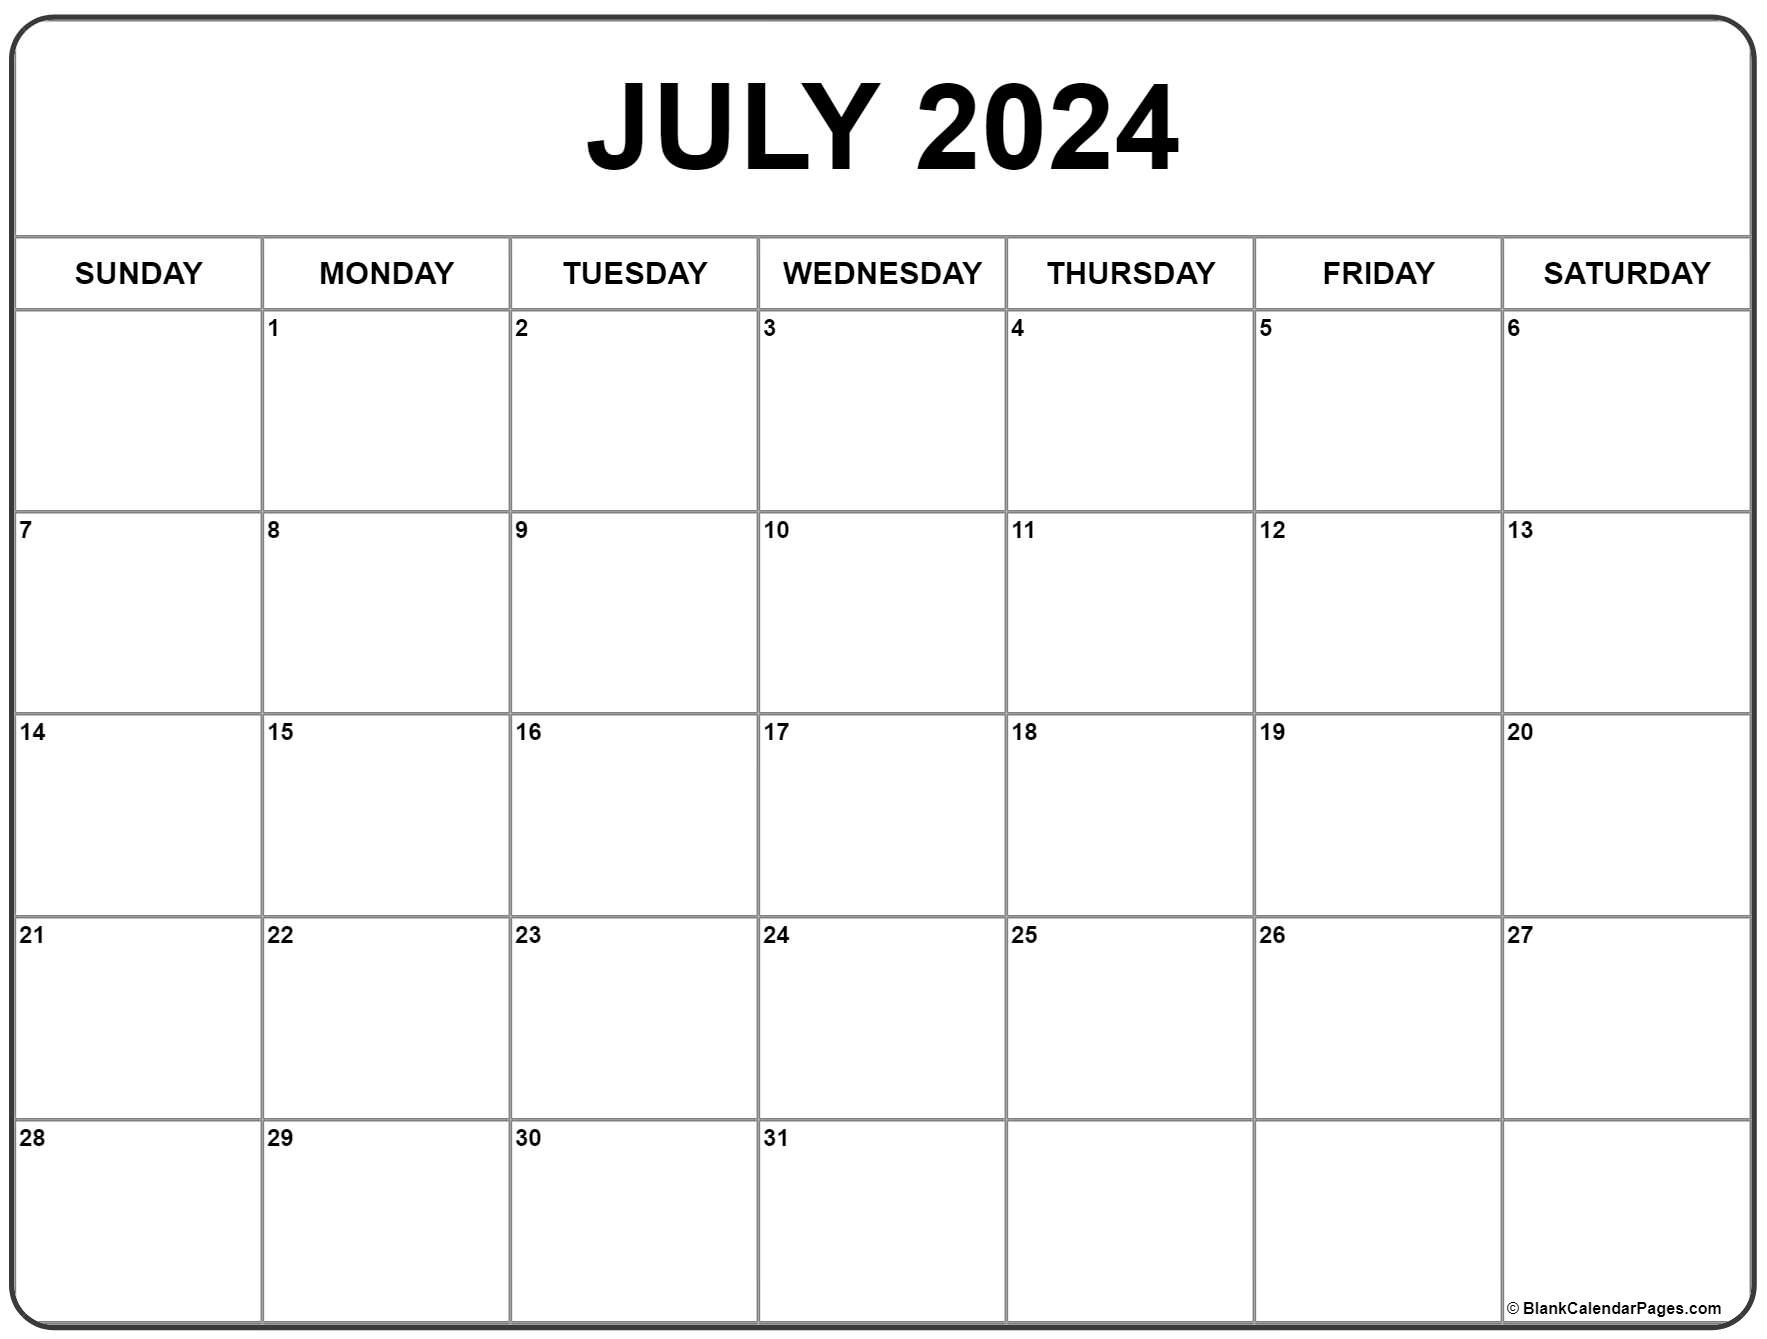 July 2024 Calendar | Free Printable Calendar for Printable July 2024 Calendar